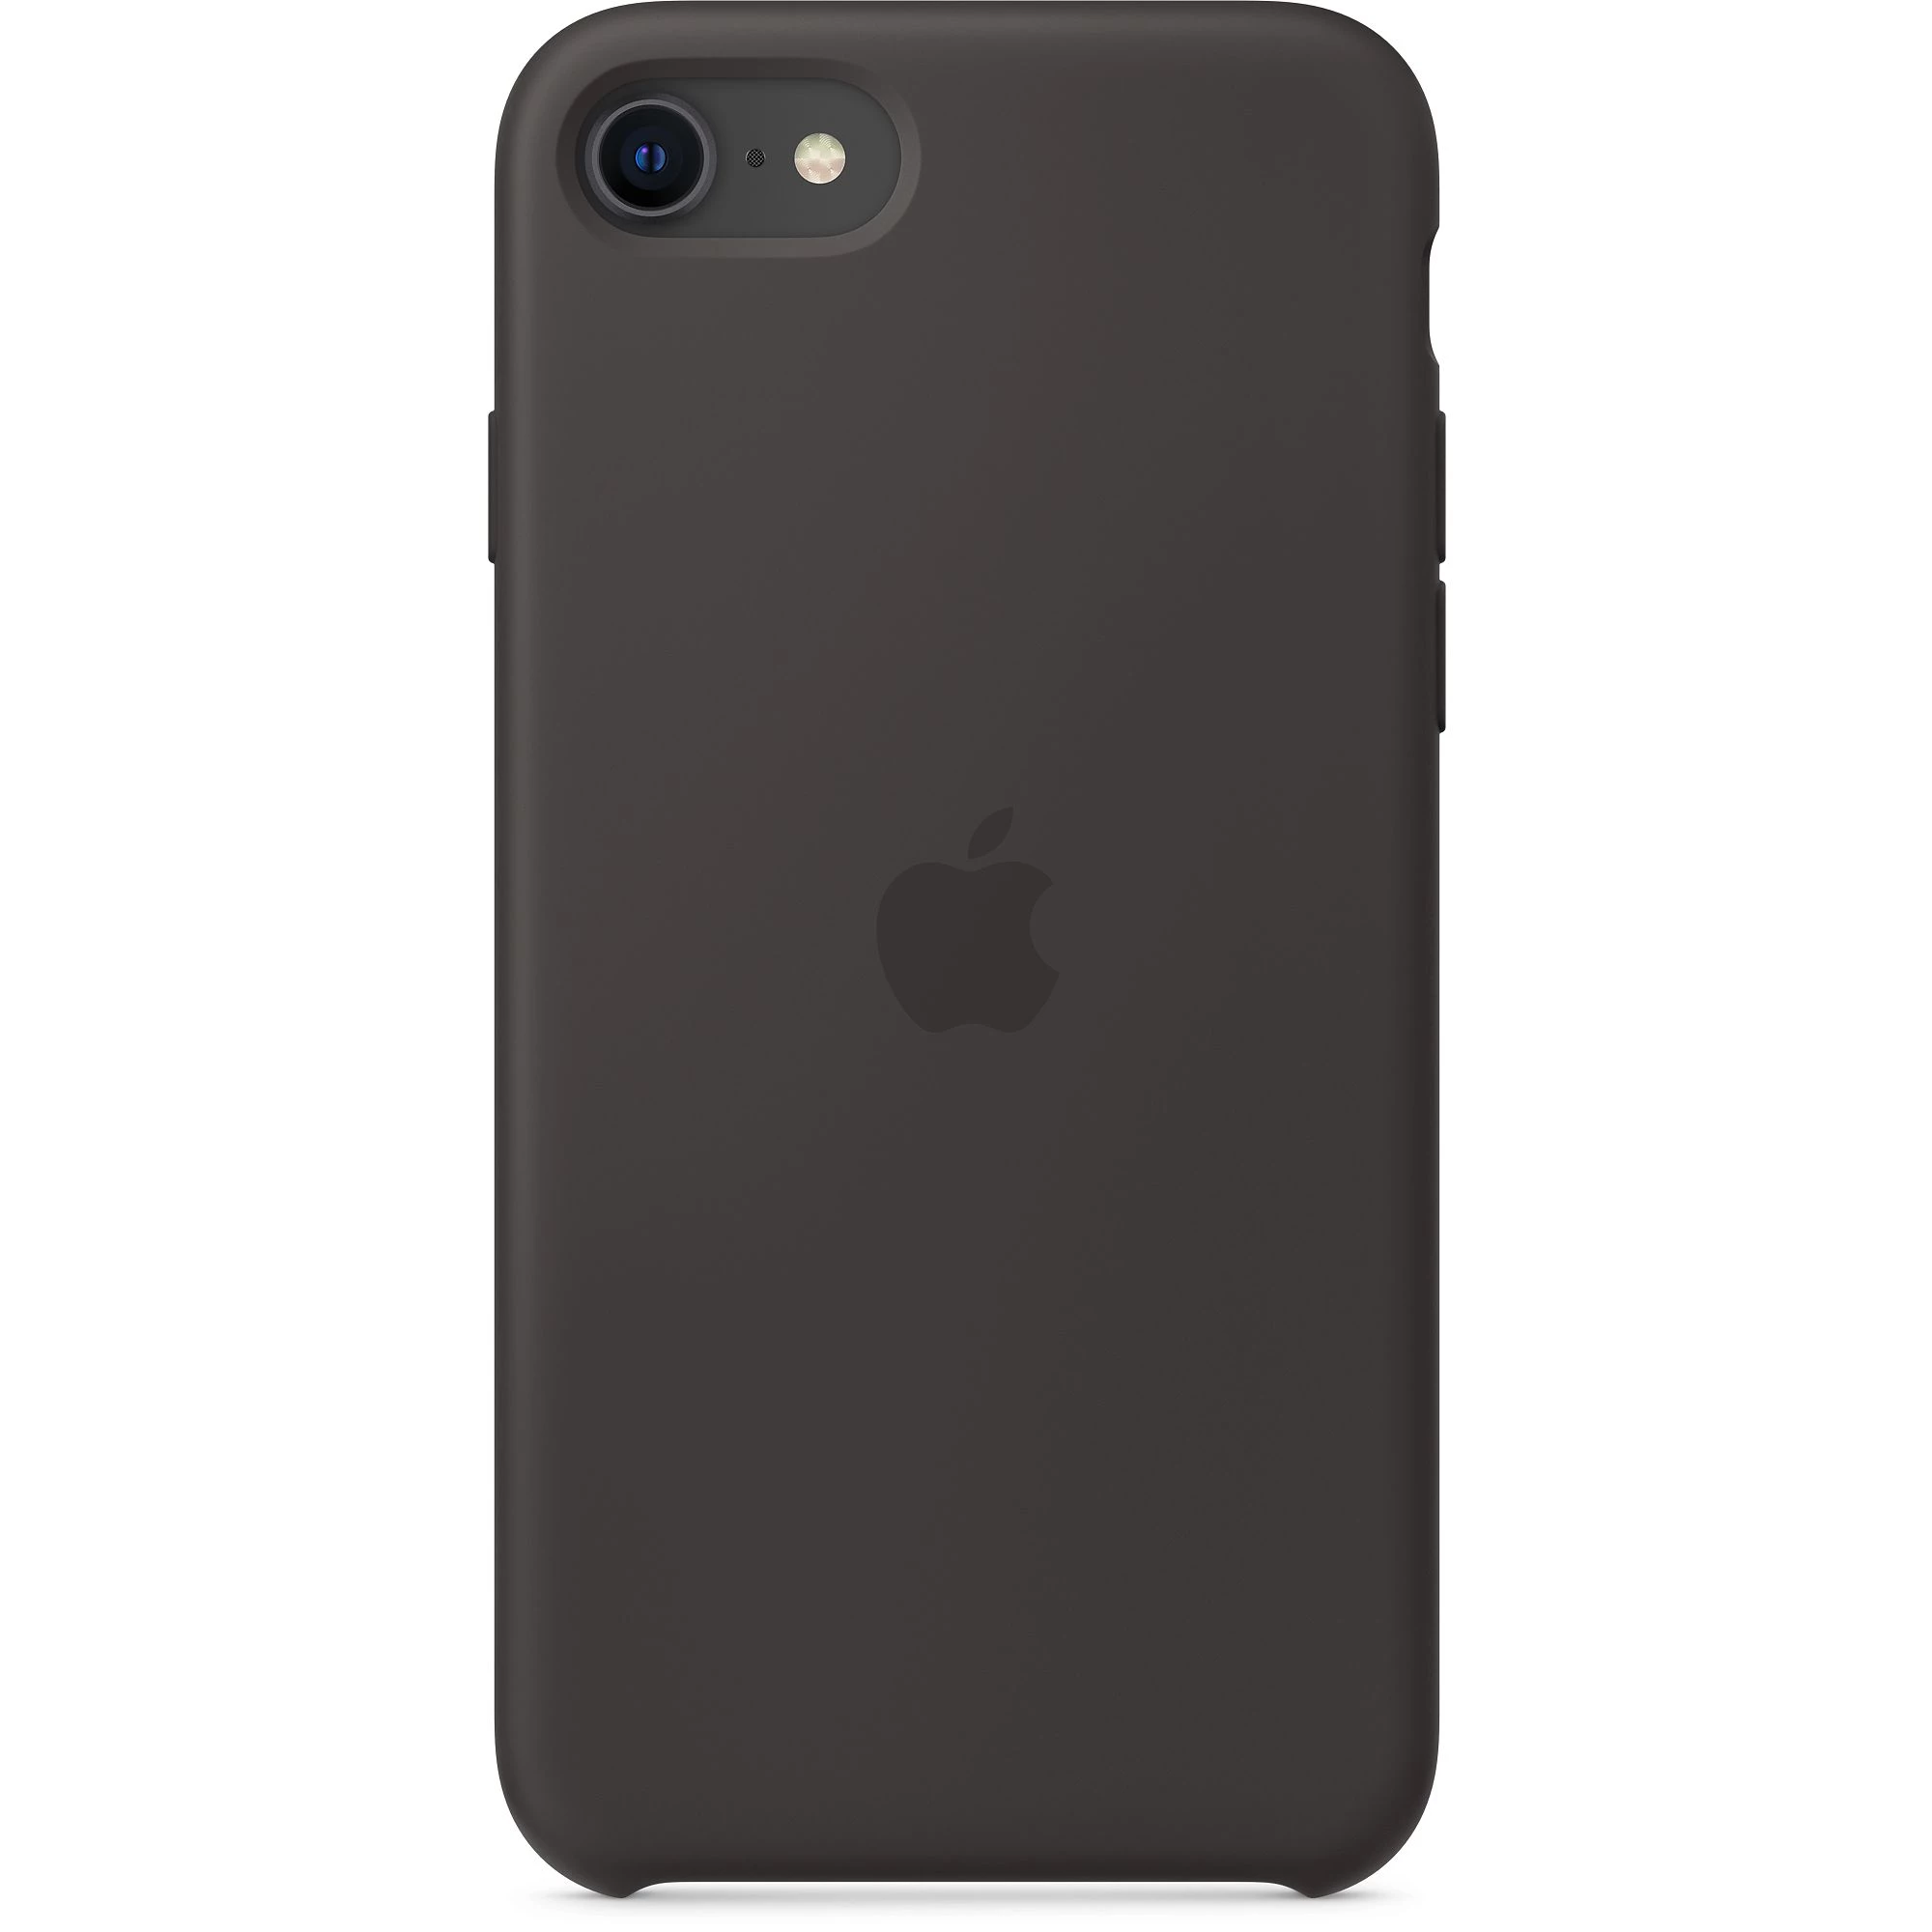 Apple iPhone SE Silicone Case - Black (MXYH2)